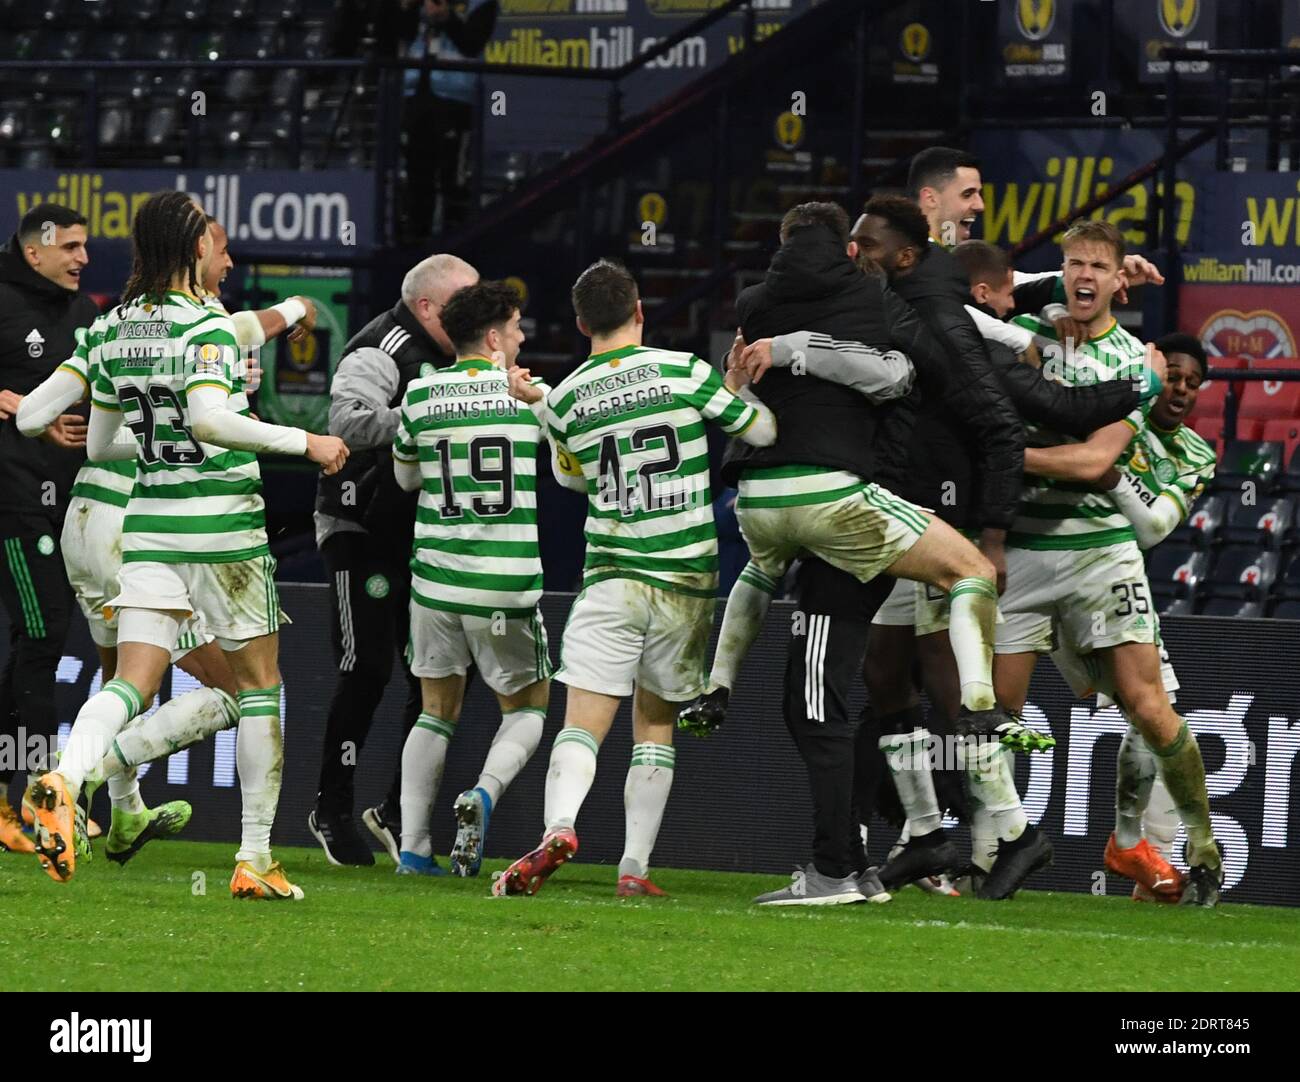 Celtic 0-1 Kilmarnock, 2012 Scottish League Cup Final